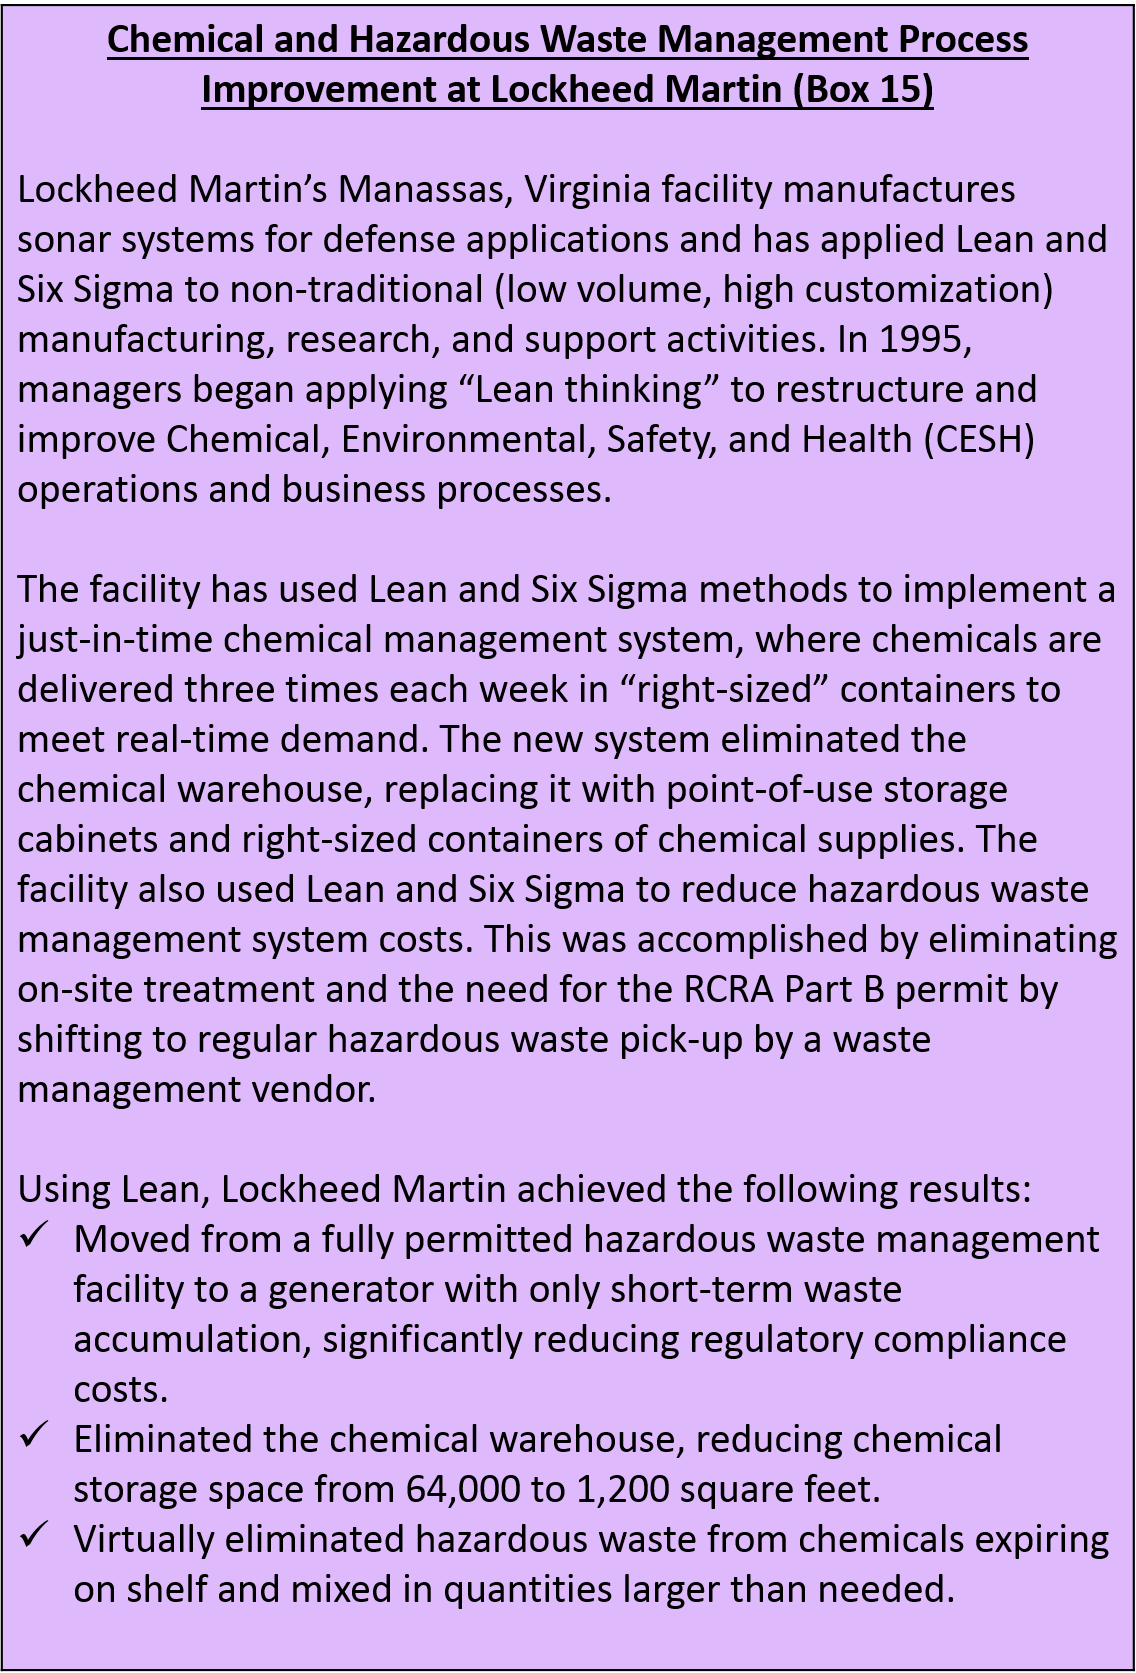 Chemical and Hazardous Waste Management Process Improvement at Lockheed Martin (Box 15)